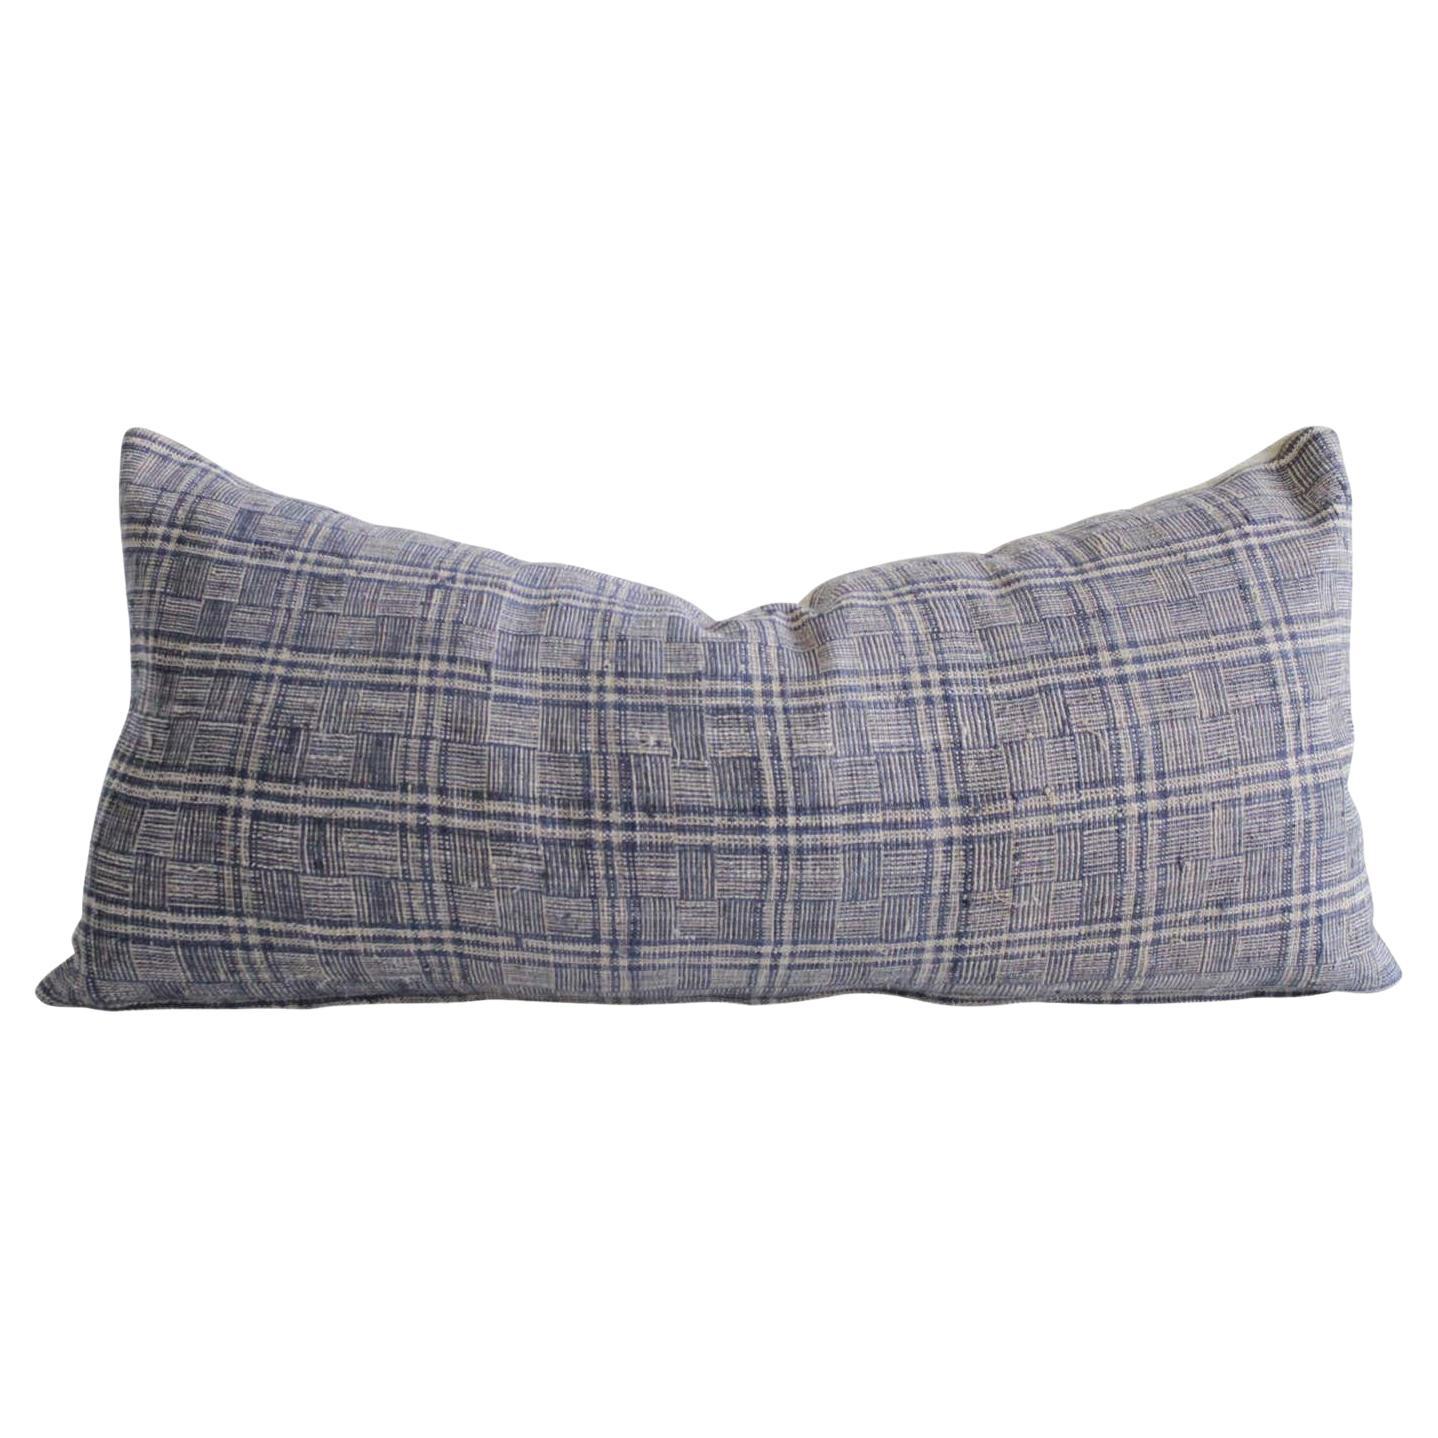 Antique Homespun Linen Lumbar Pillows Vintage Indigo and Natural Check Pattern For Sale